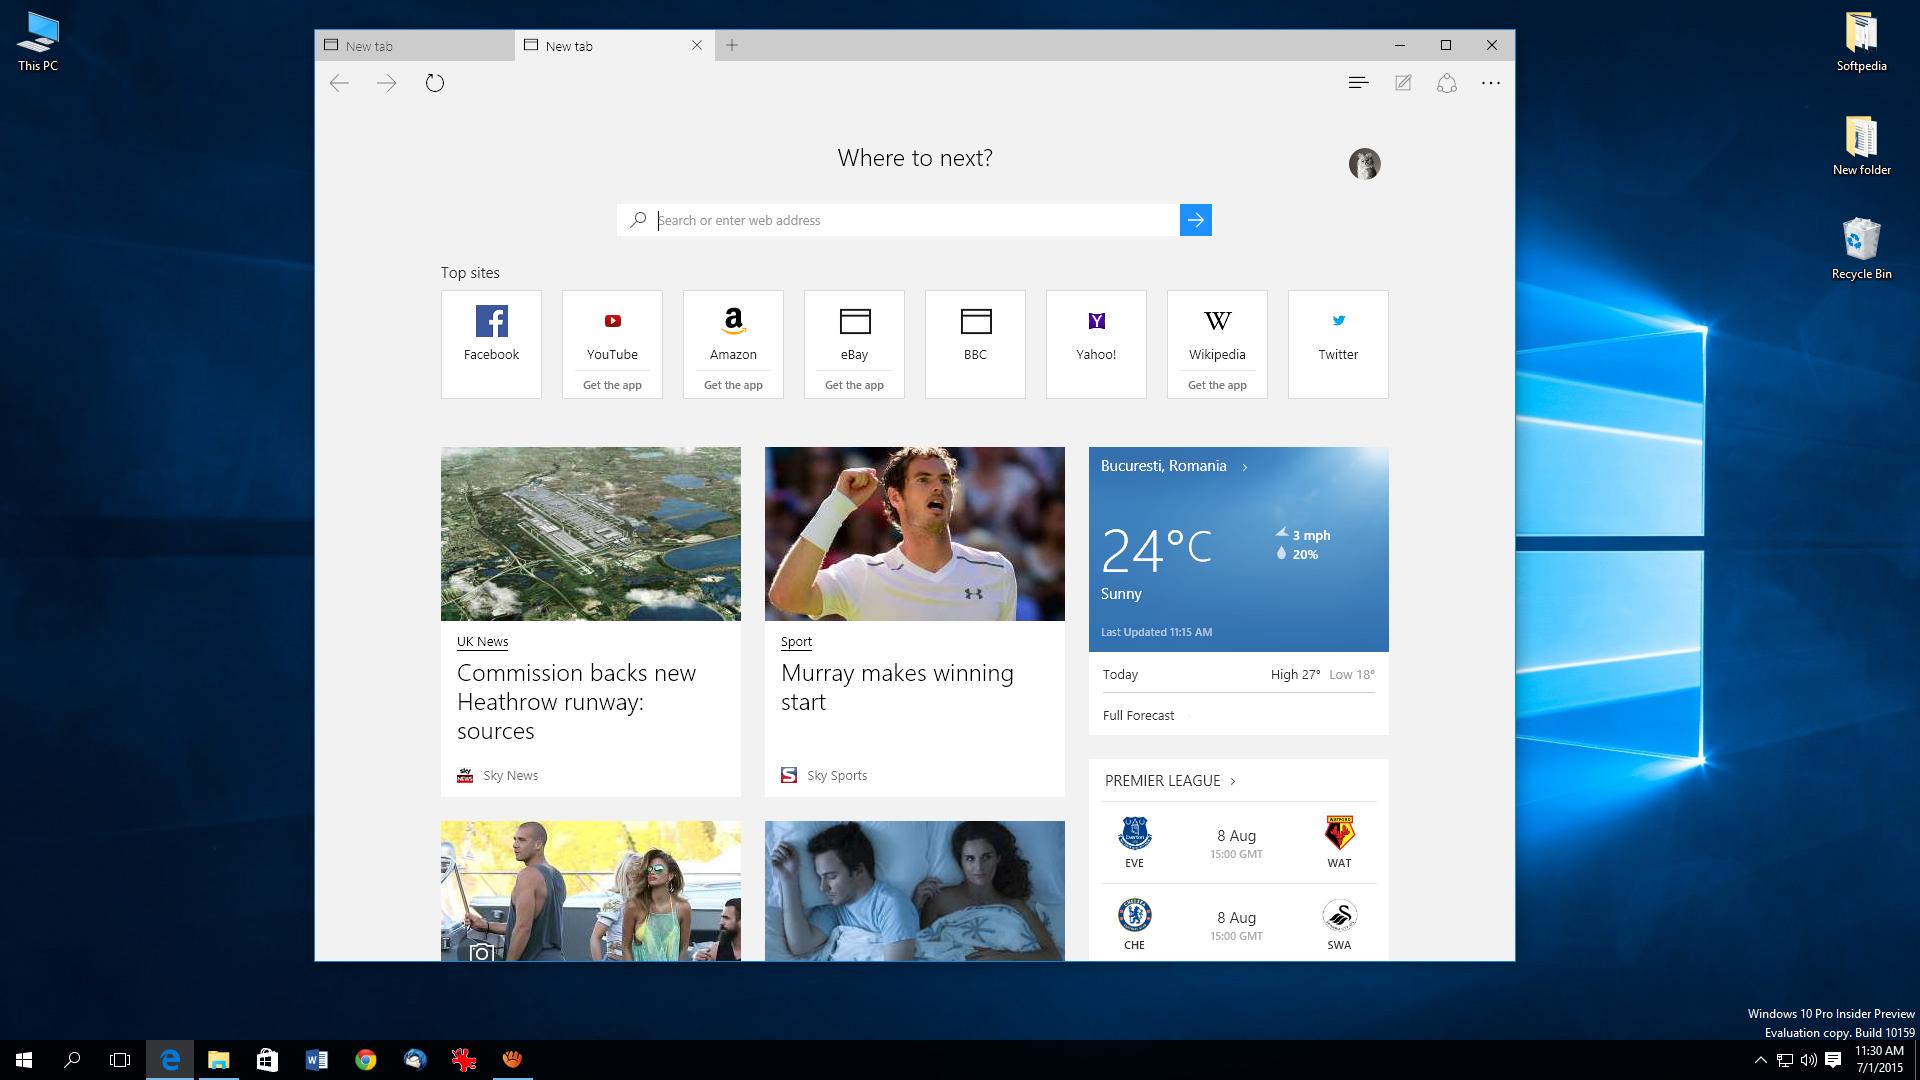 Microsoft edge for windows 10 offline installer - greswing